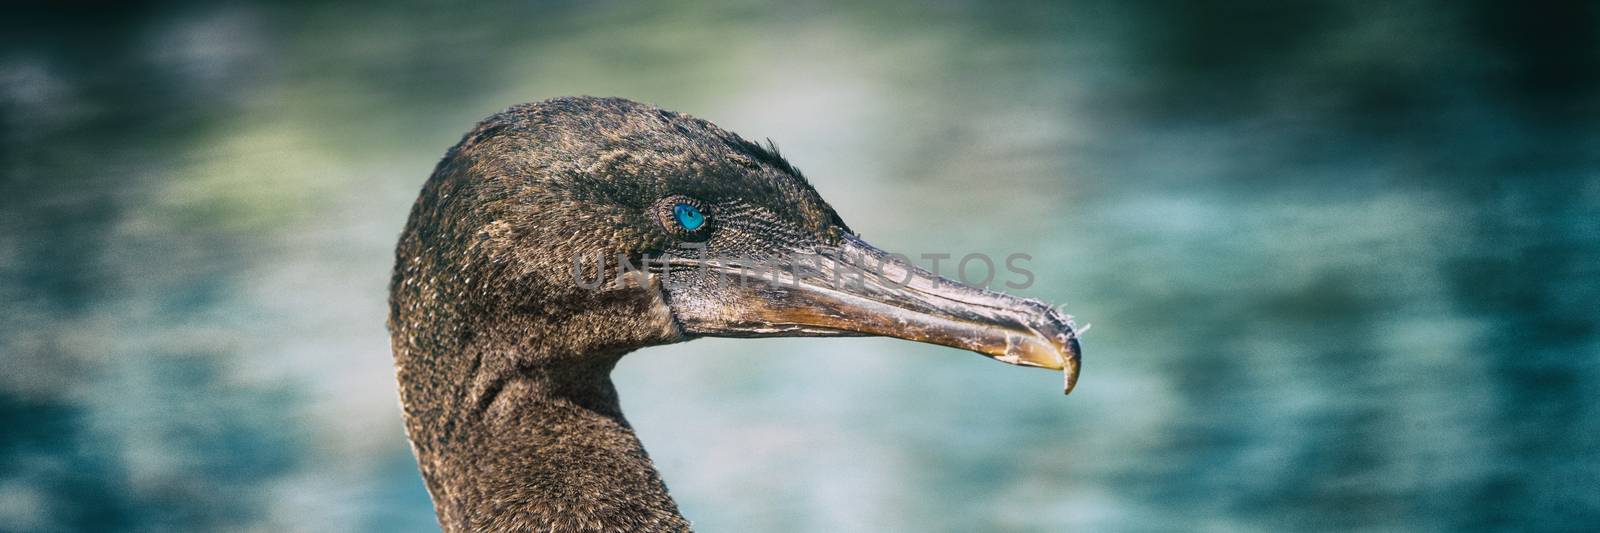 Galapagos animals wildlife - bird flightless cormorant aka galapagos cormorants by Maridav